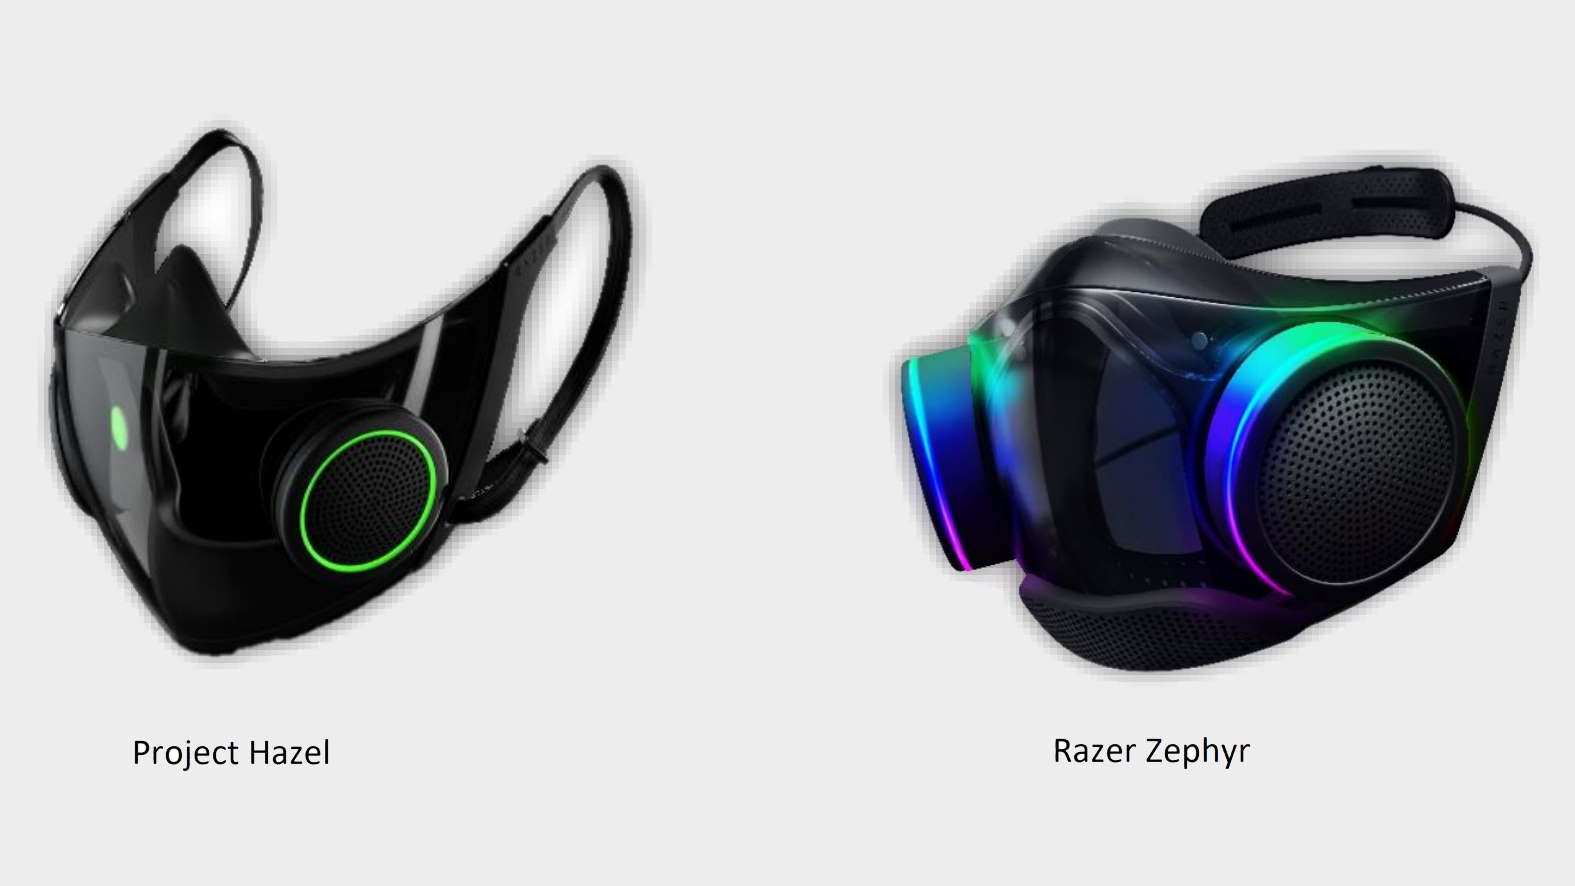 Razer Zephyr face mask renders